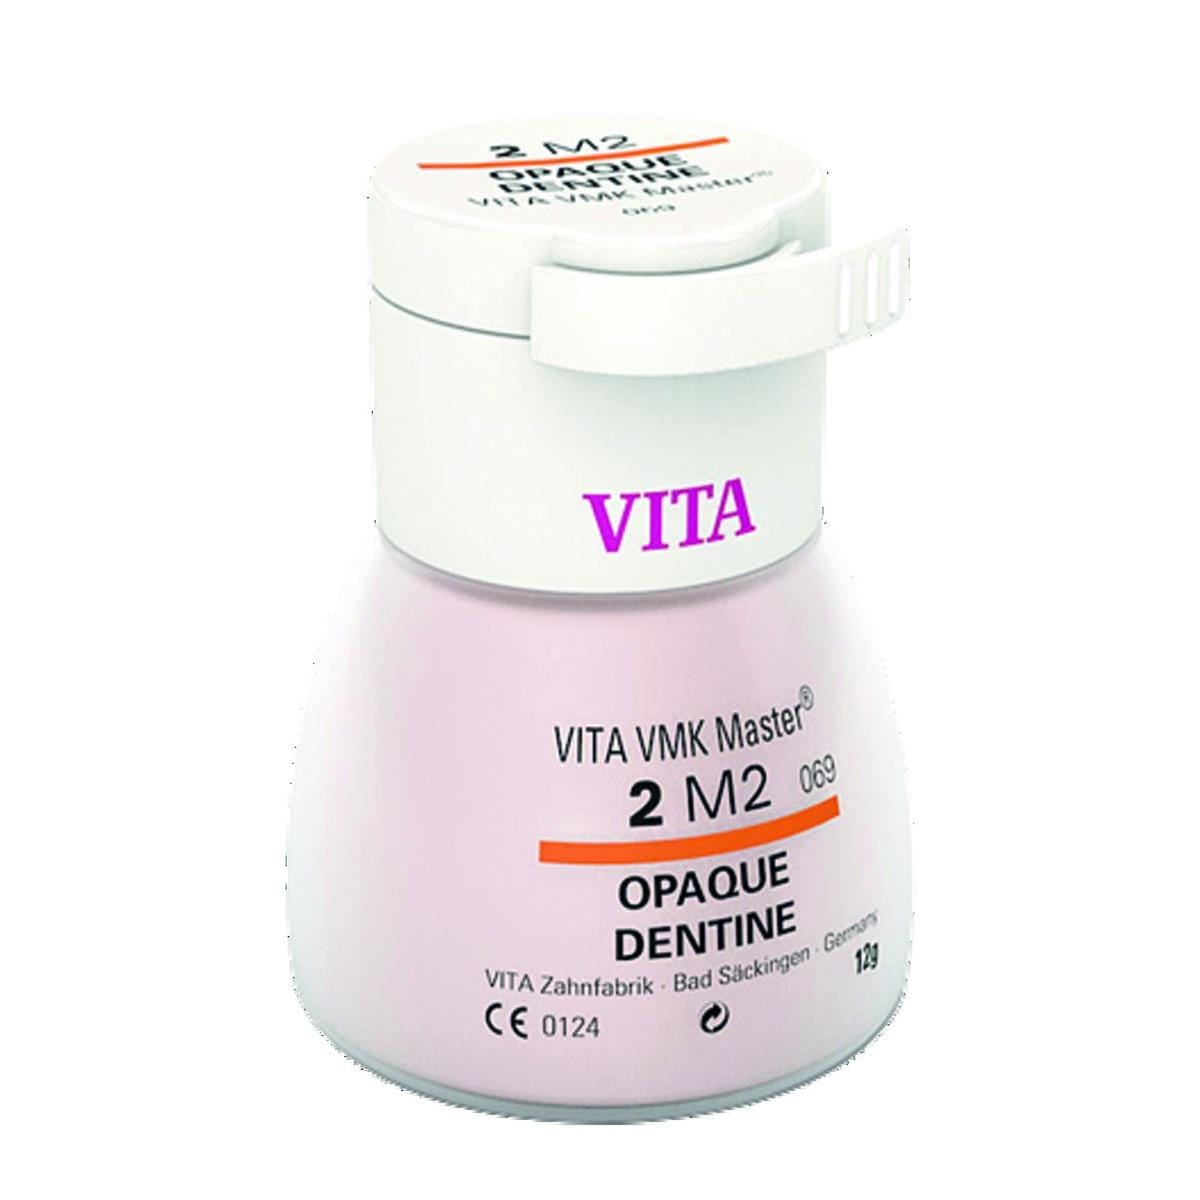 VMK Master VITA - Dentine Opaque - 4M3 - Le flacon de 12 g